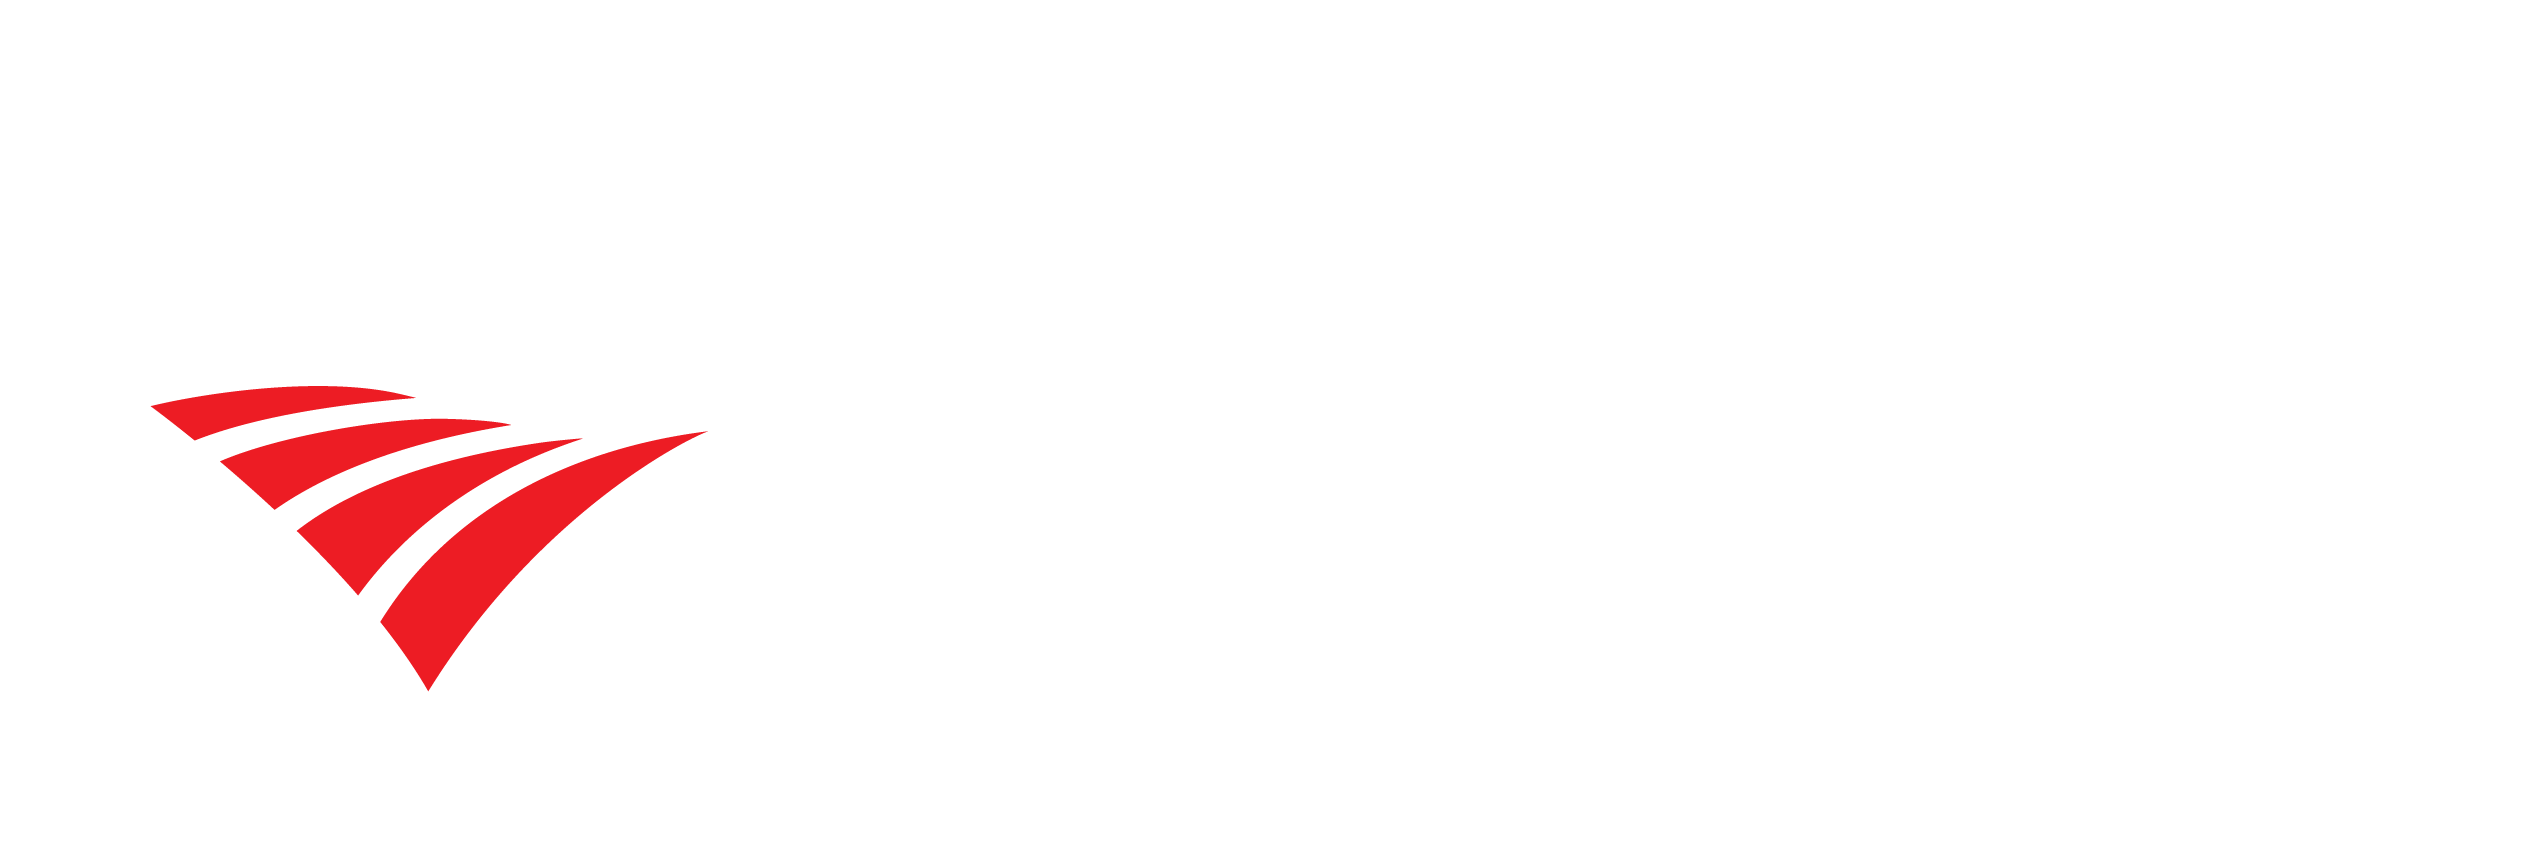 Frasers Logistics & Commercial Trust Logo